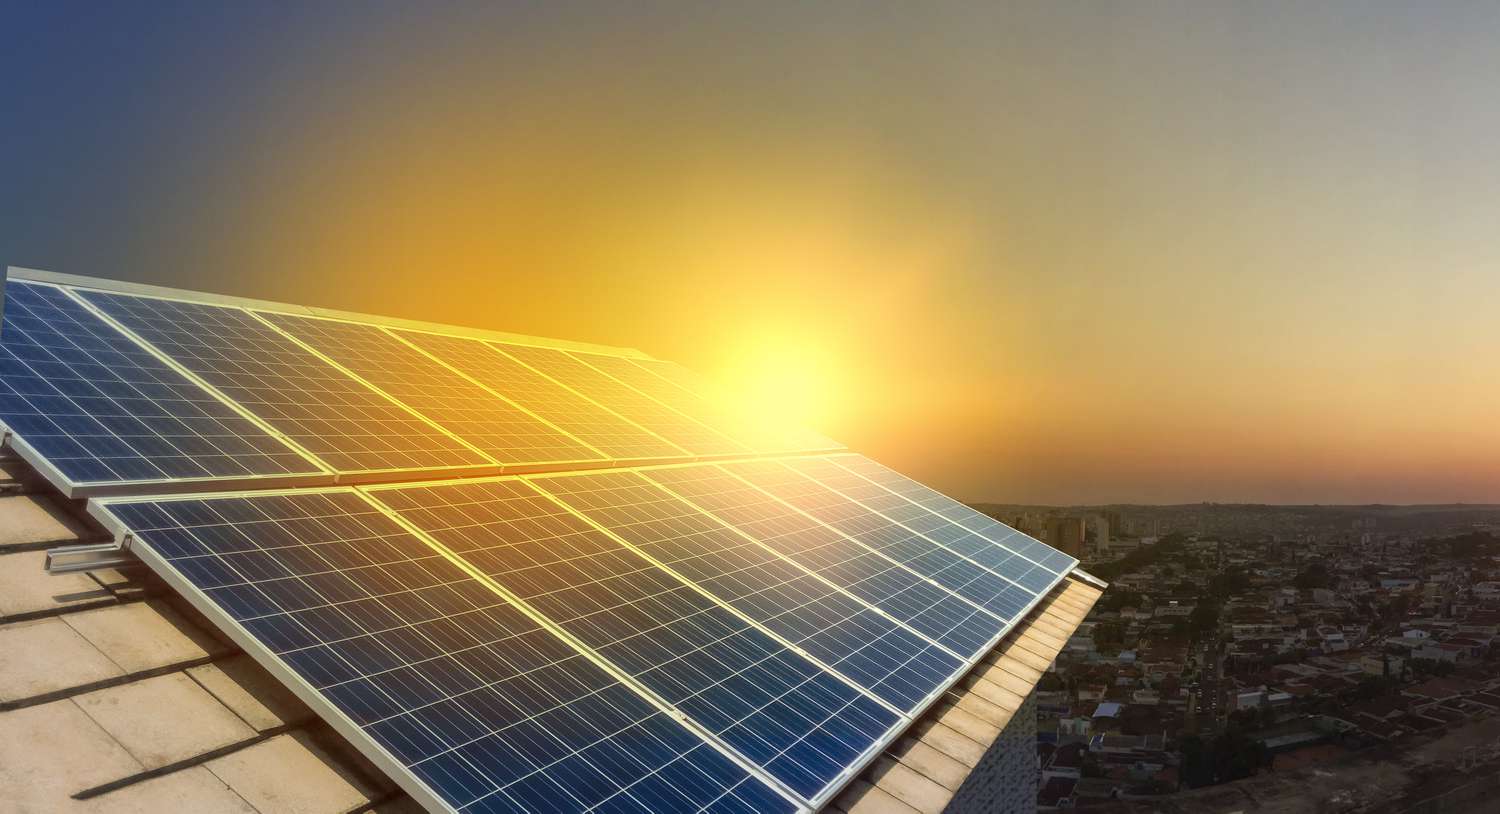 solar panel photovoltaic installation on a roof alternative electricity source 884806548 5c5b67b9c9e77c000156659b